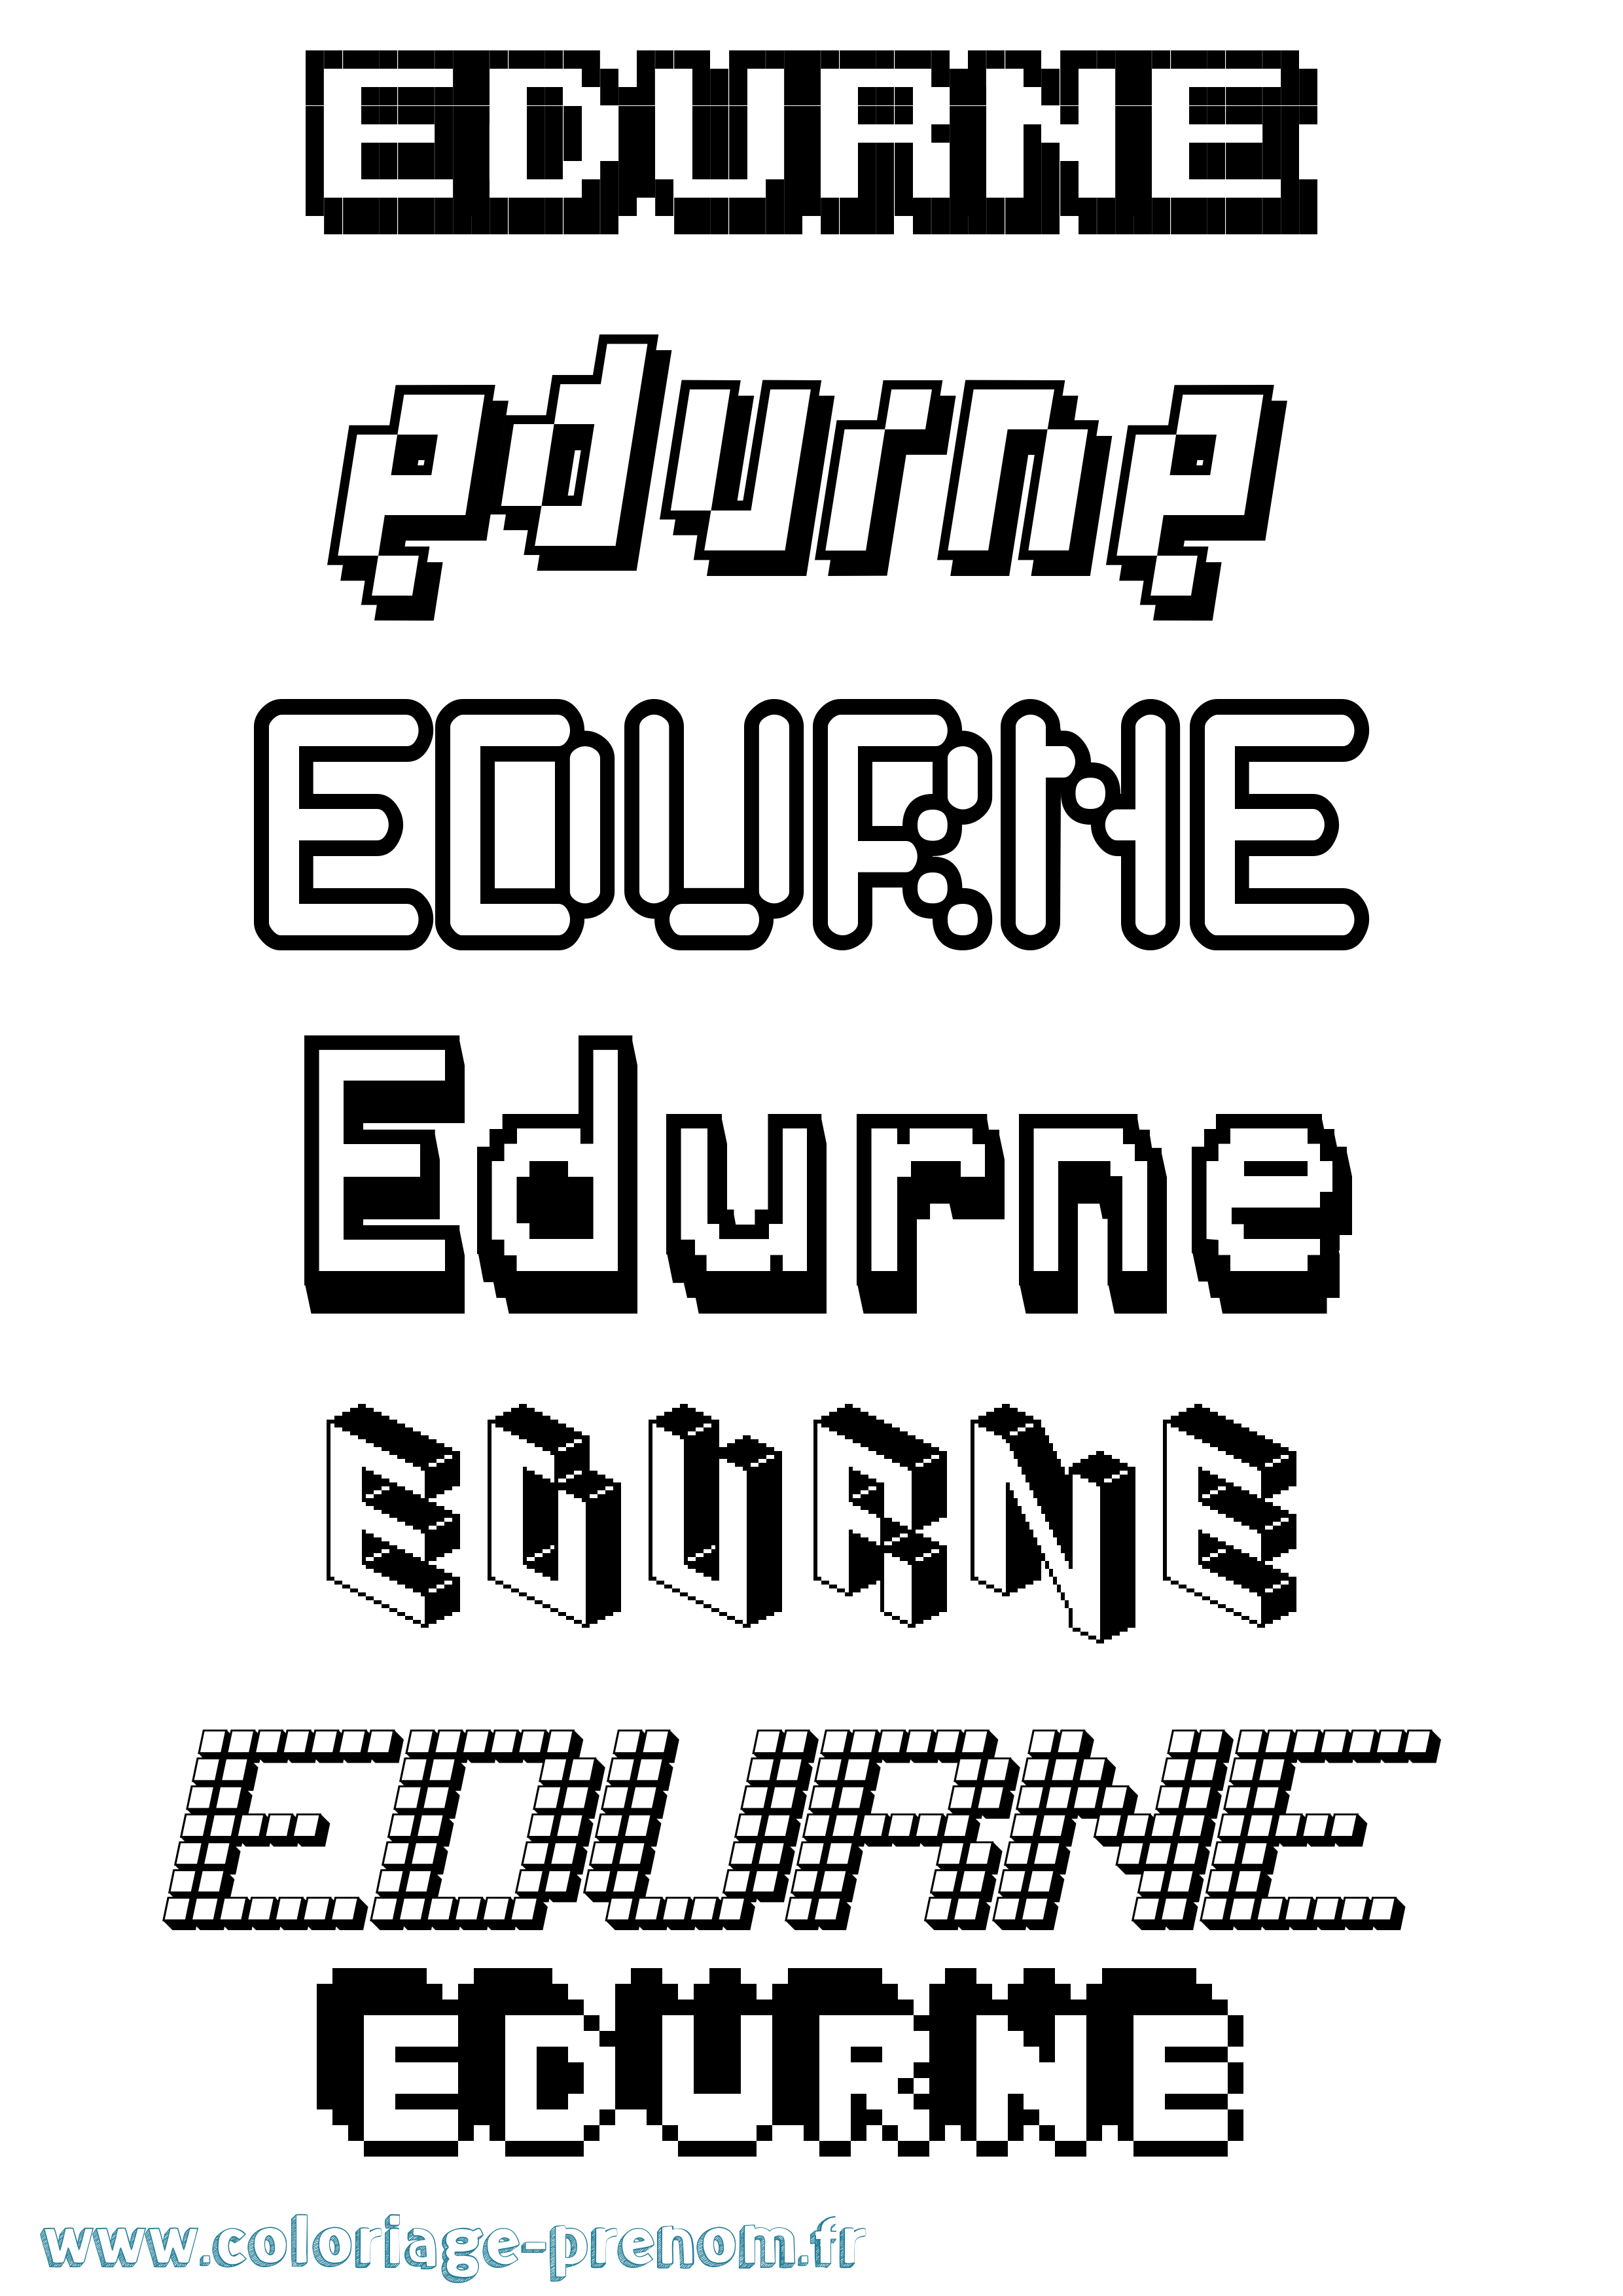 Coloriage prénom Edurne Pixel